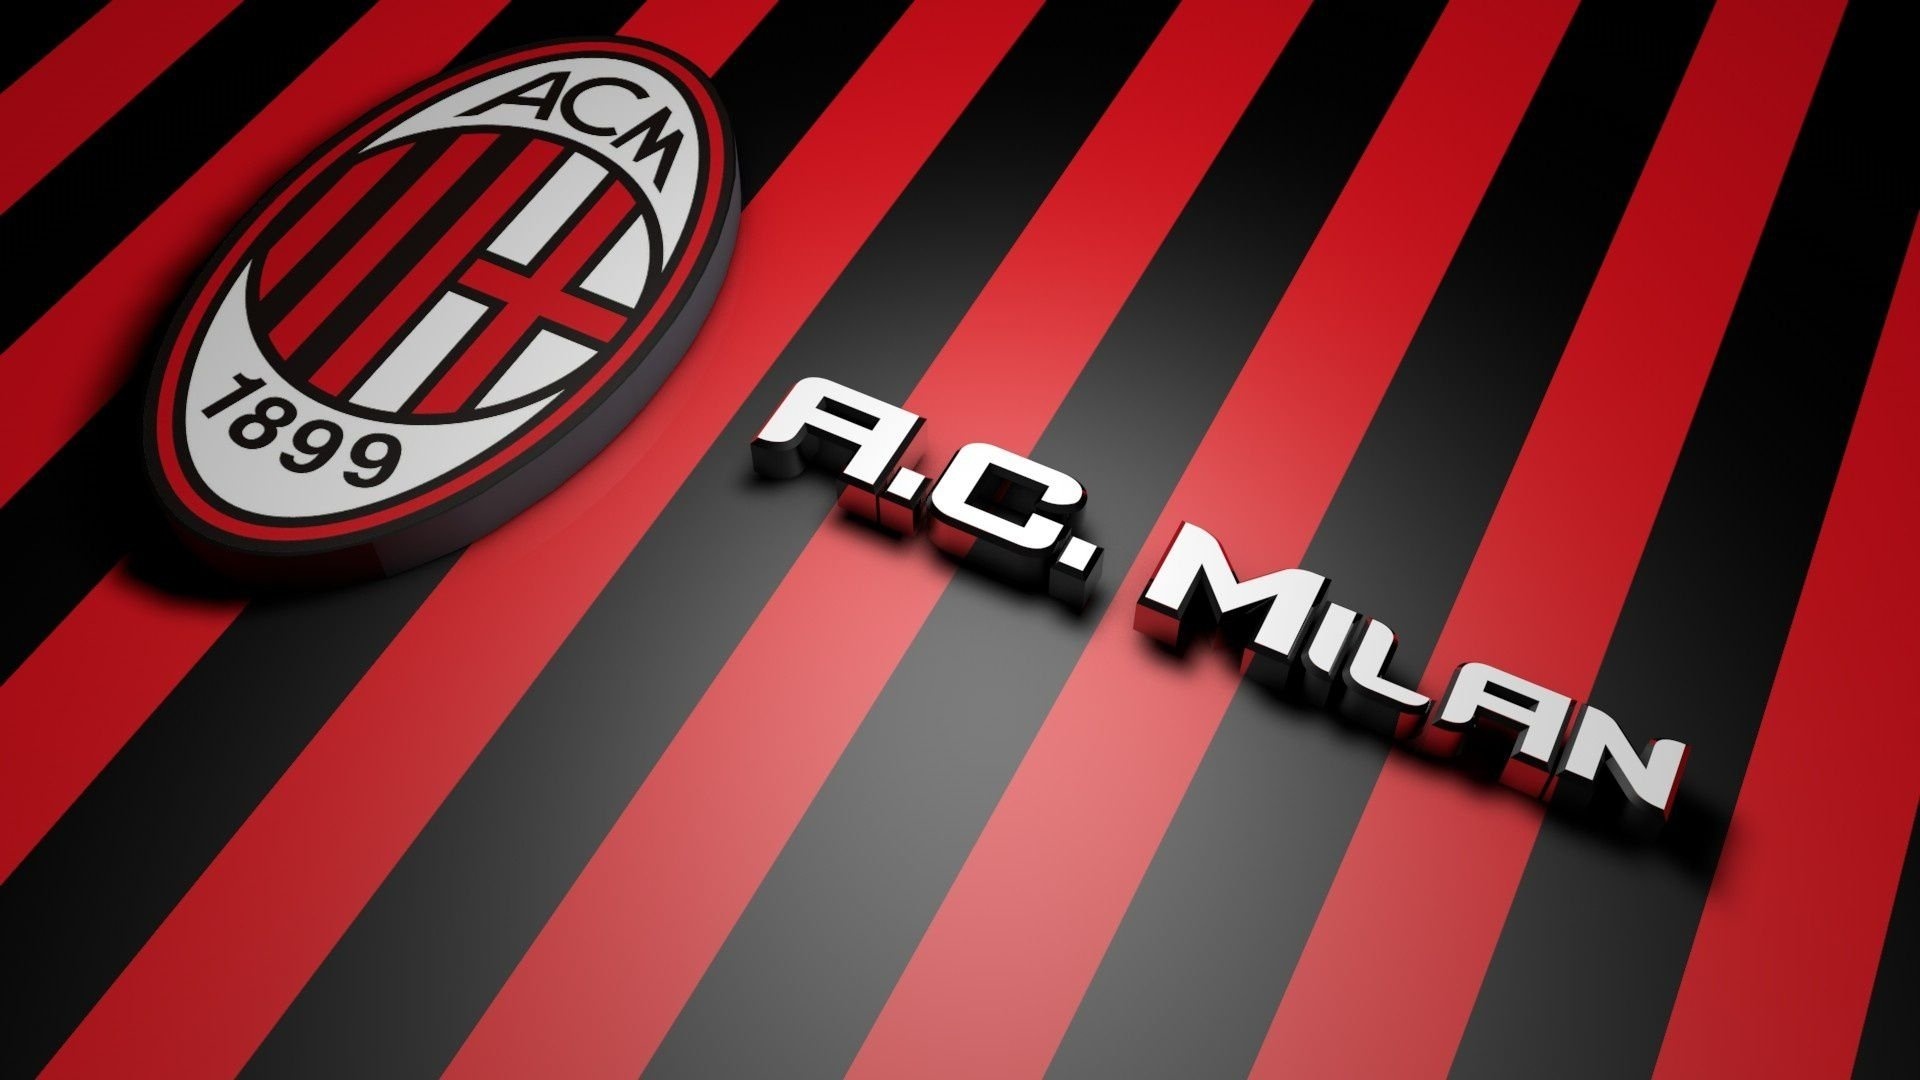 AC Milan, Sports legacy, Football heritage, Iconic club, 1920x1080 Full HD Desktop